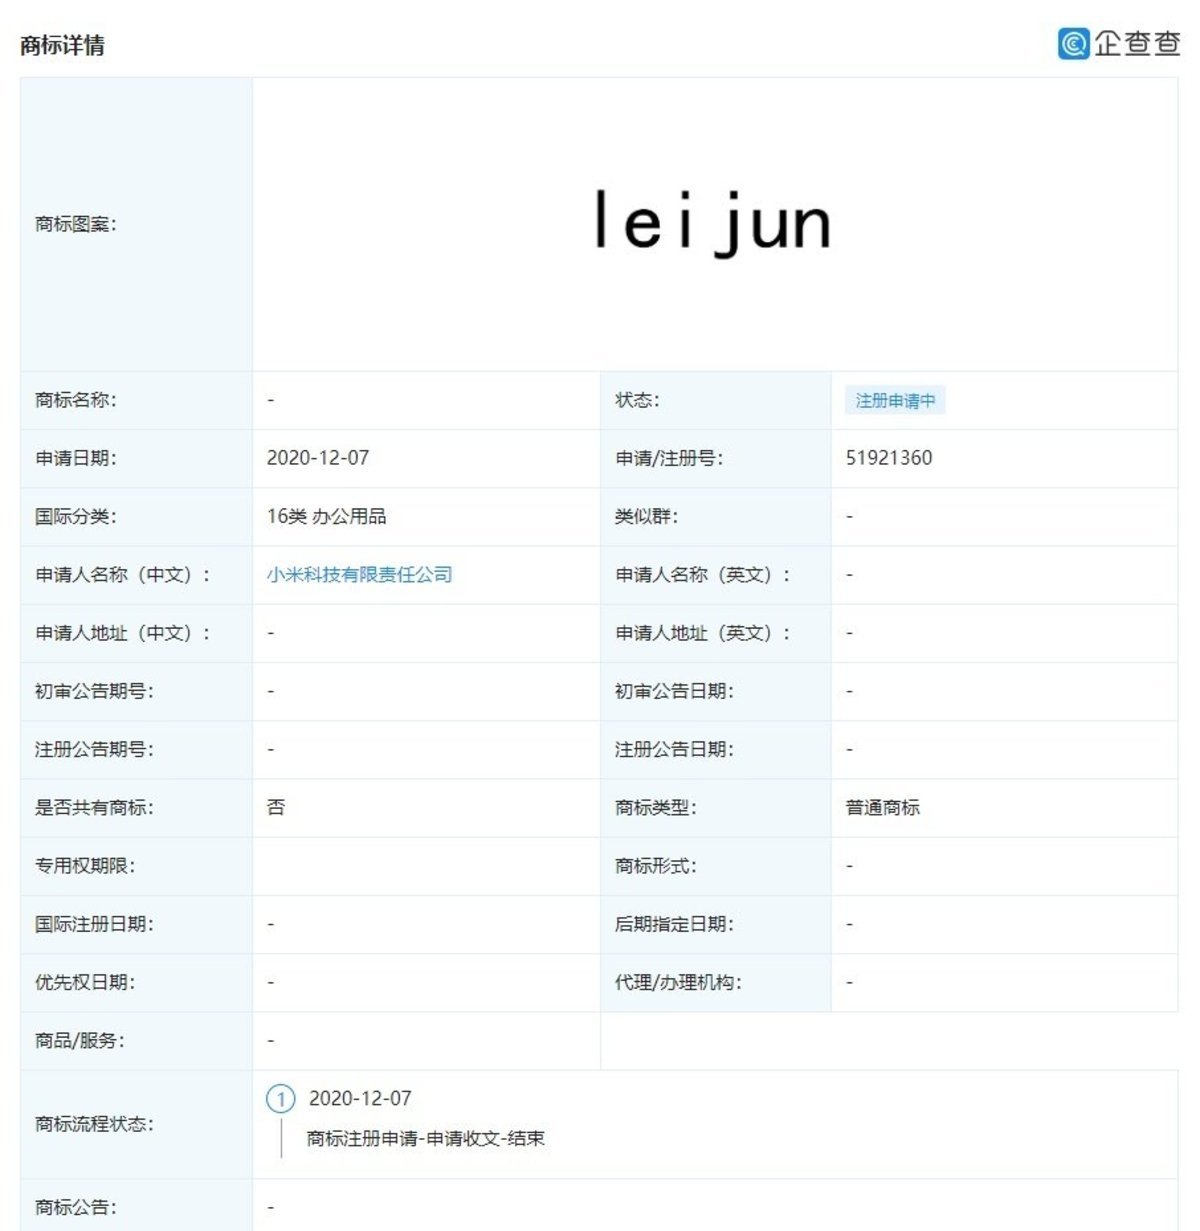 Xiaomi registra la marca Lei Jun